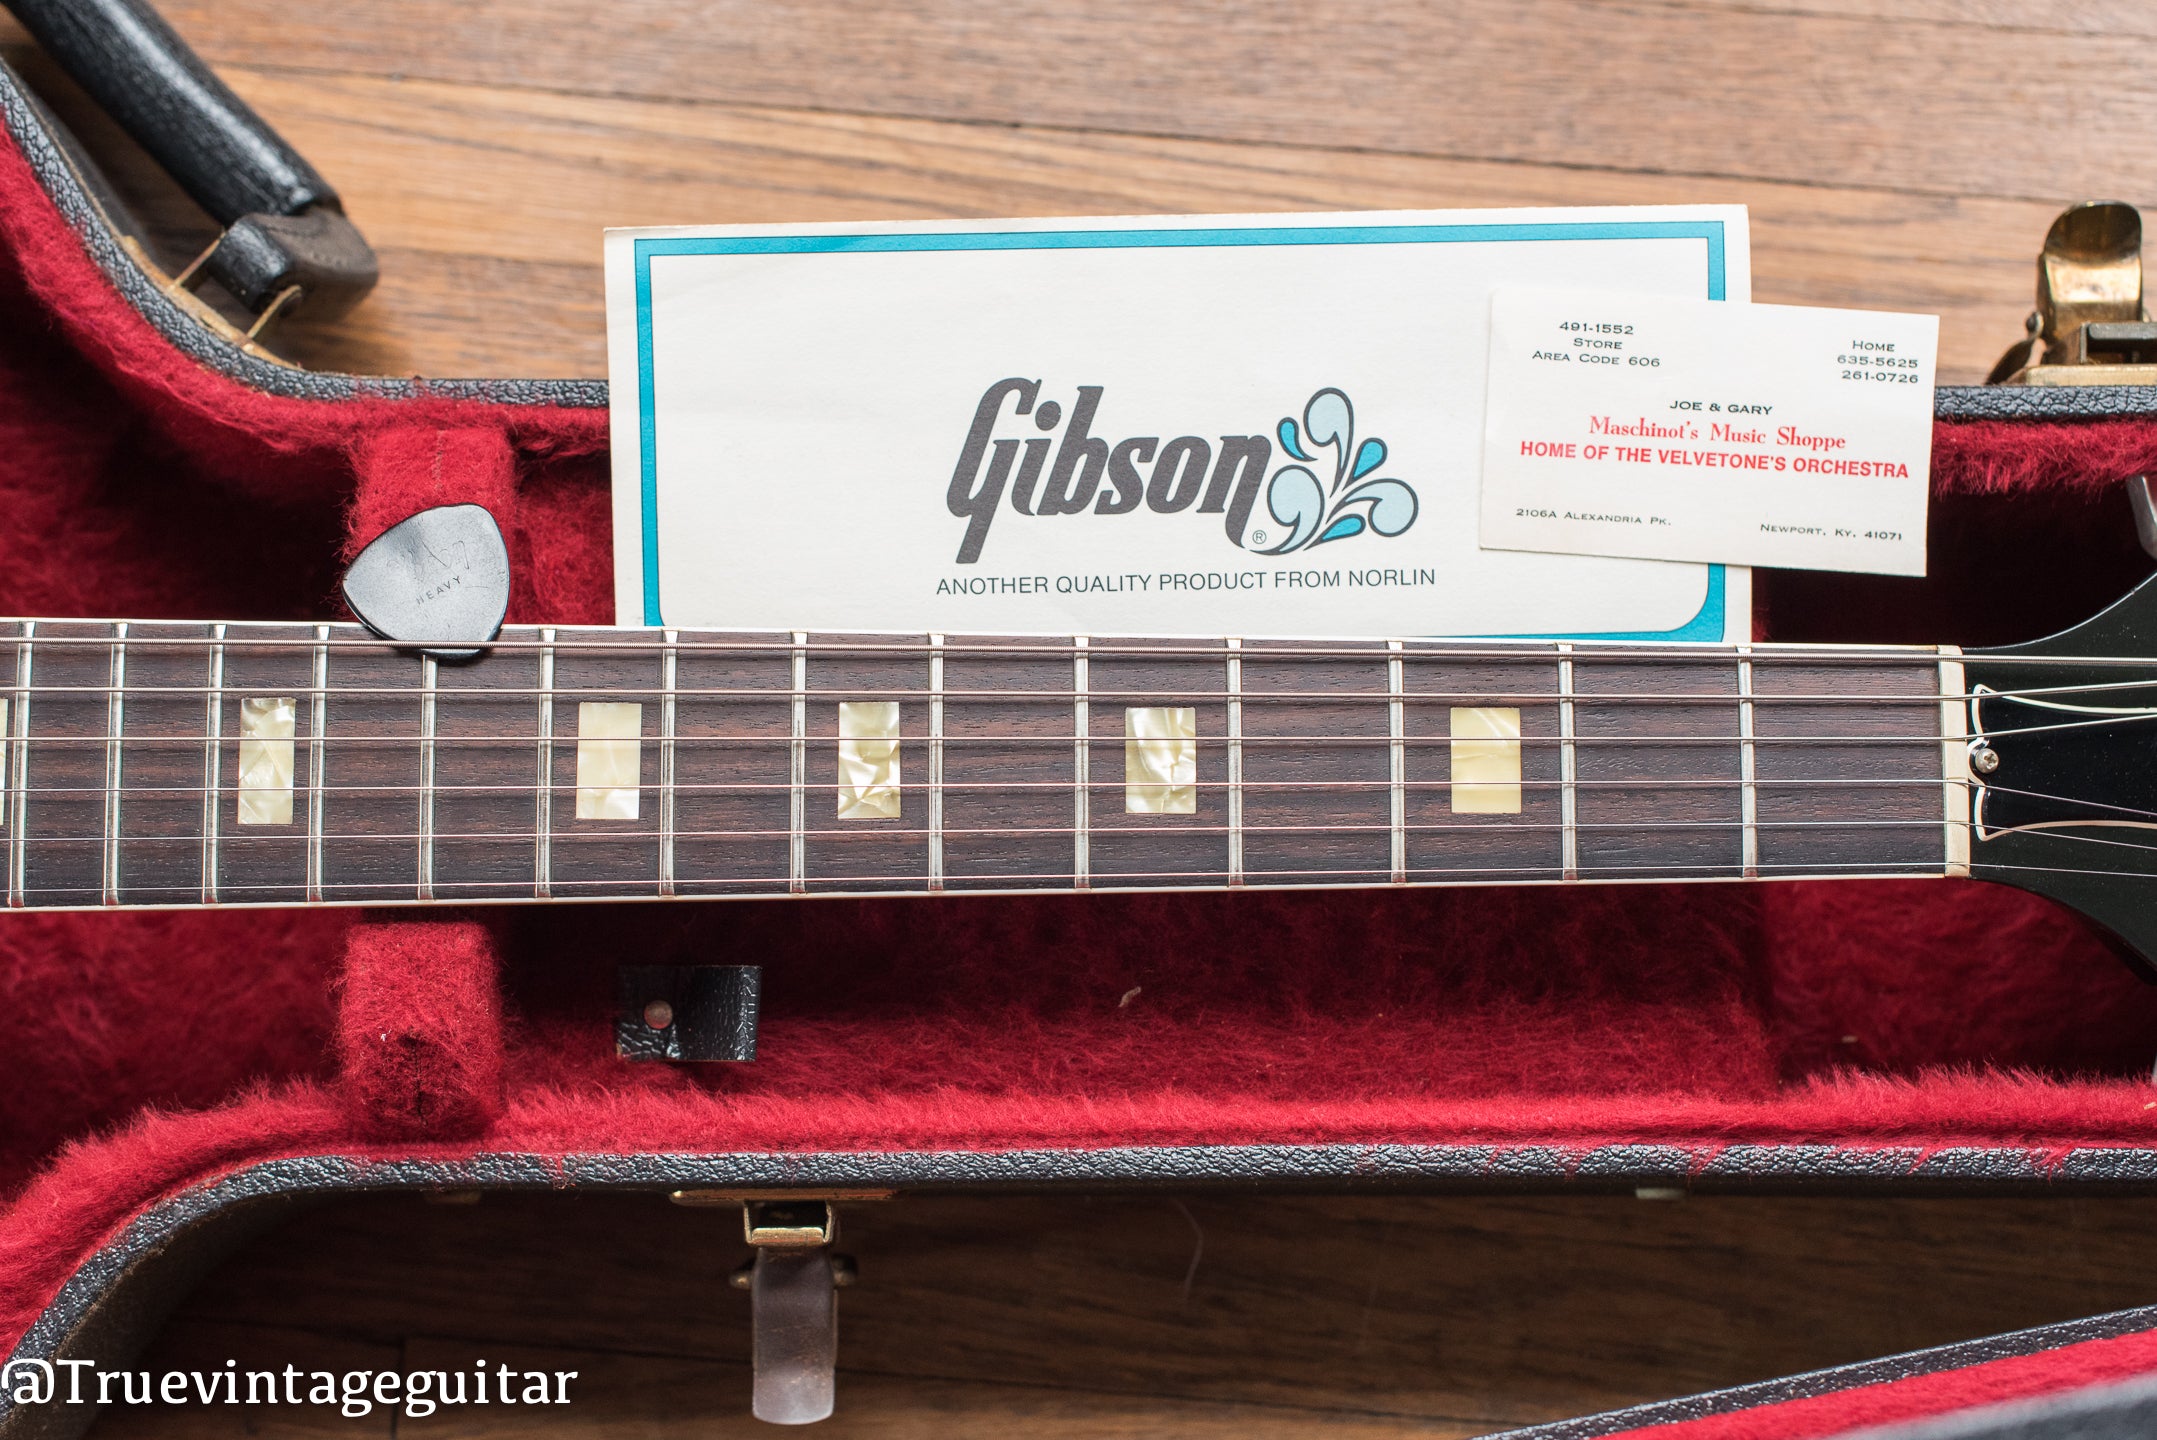 1979 Gibson ES-335 Walnut with original hang tag, manual